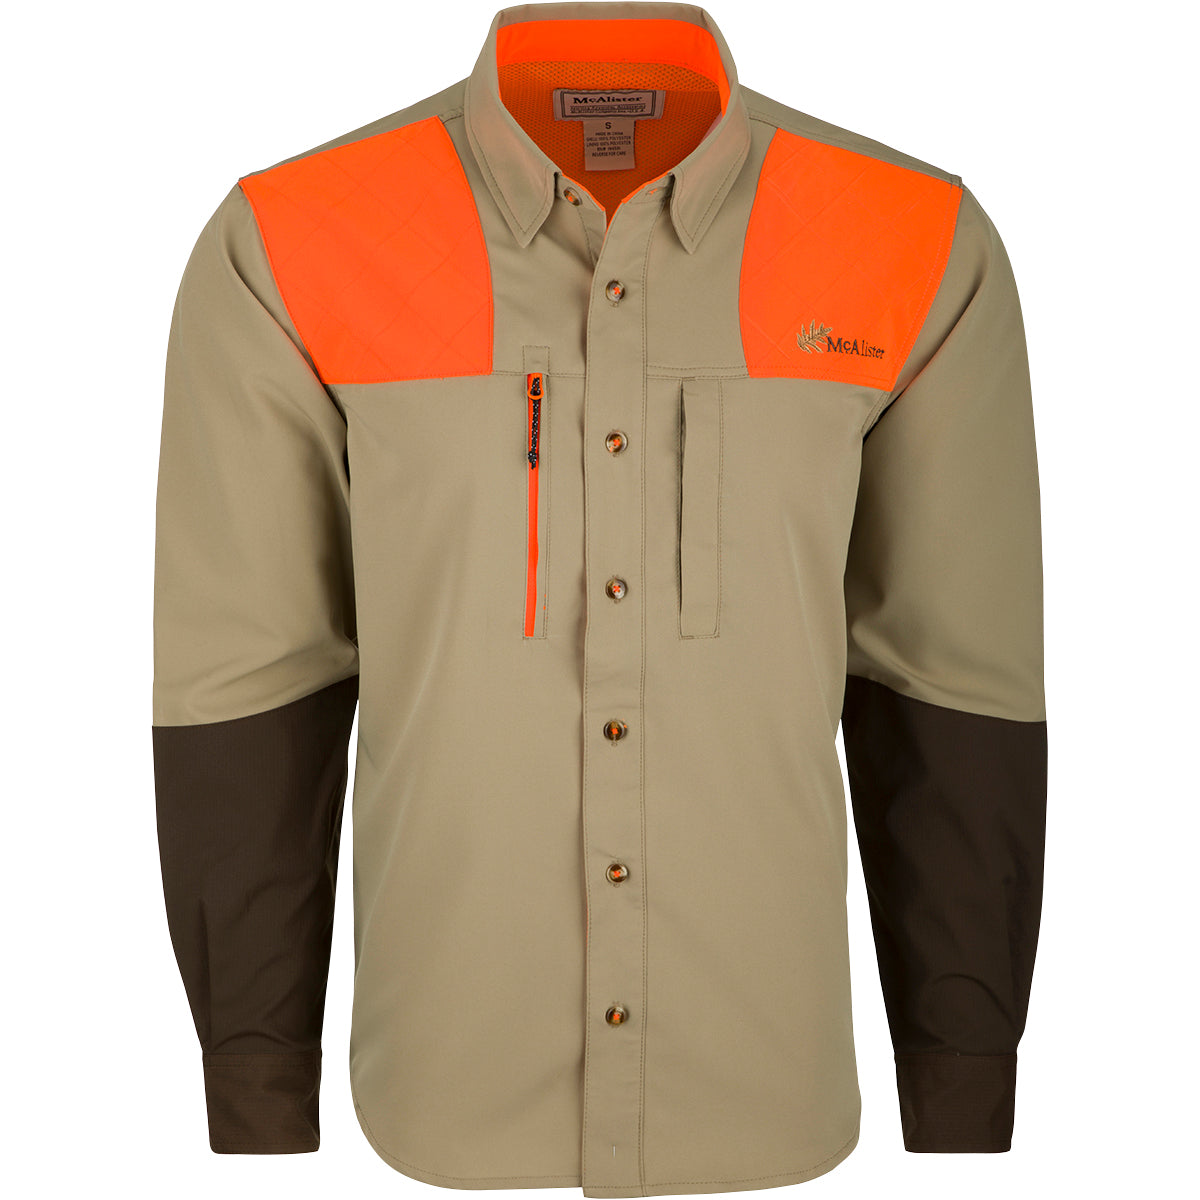 McAlister MST Upland Tech Shirt - Blaze Orange/Khaki